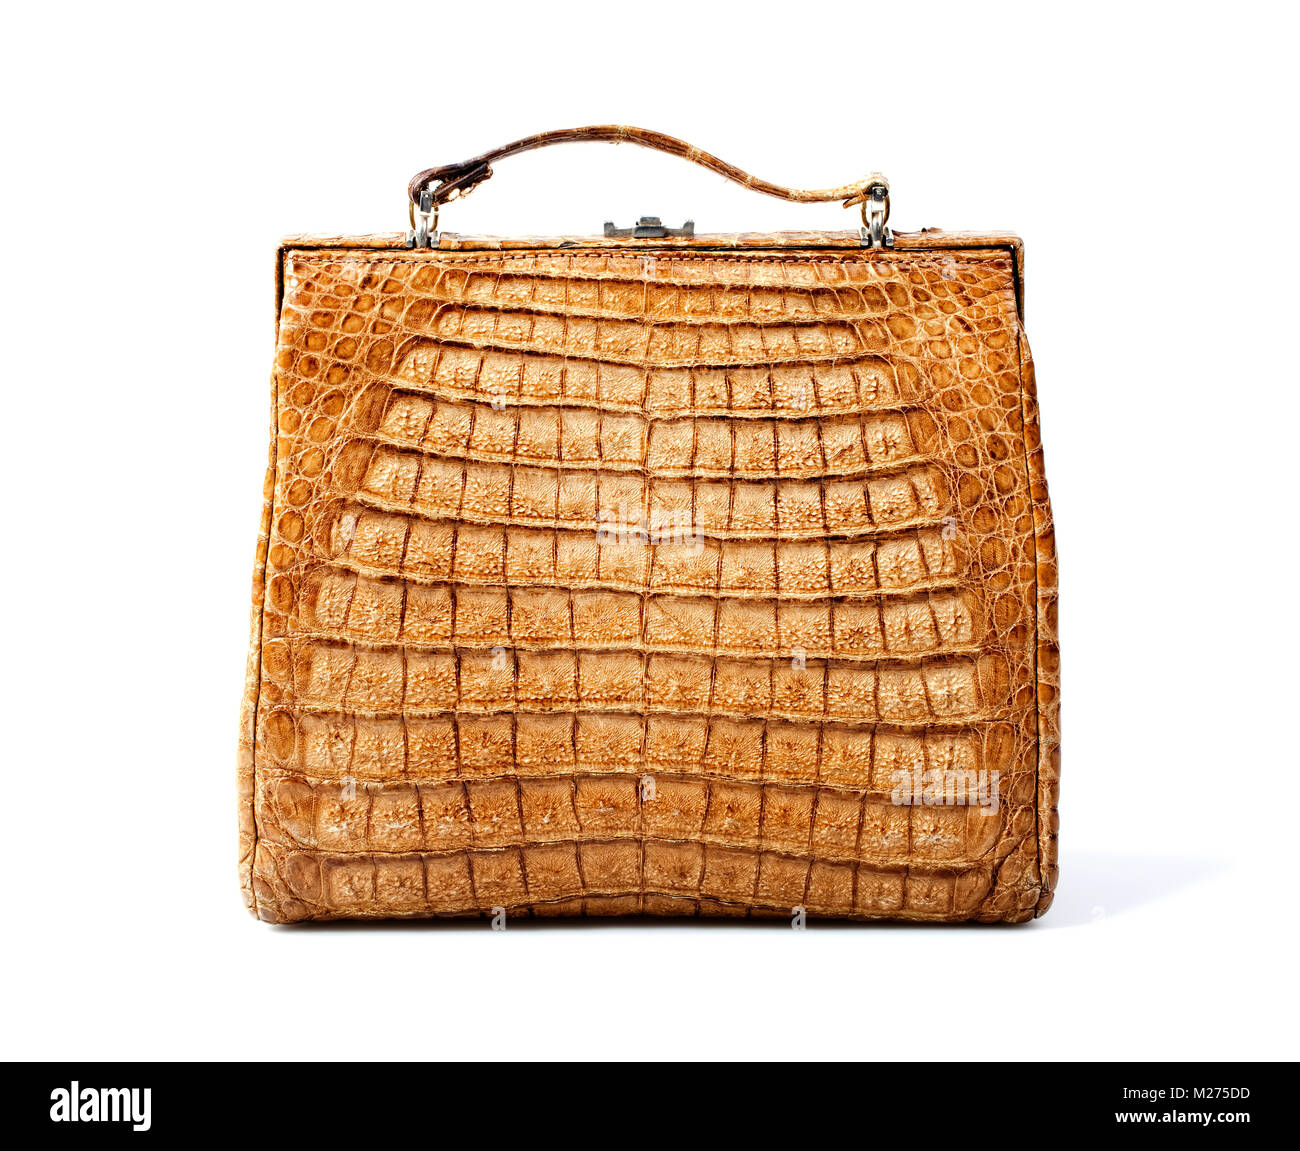 handbag made of genuine crocodile leather Stock Photo